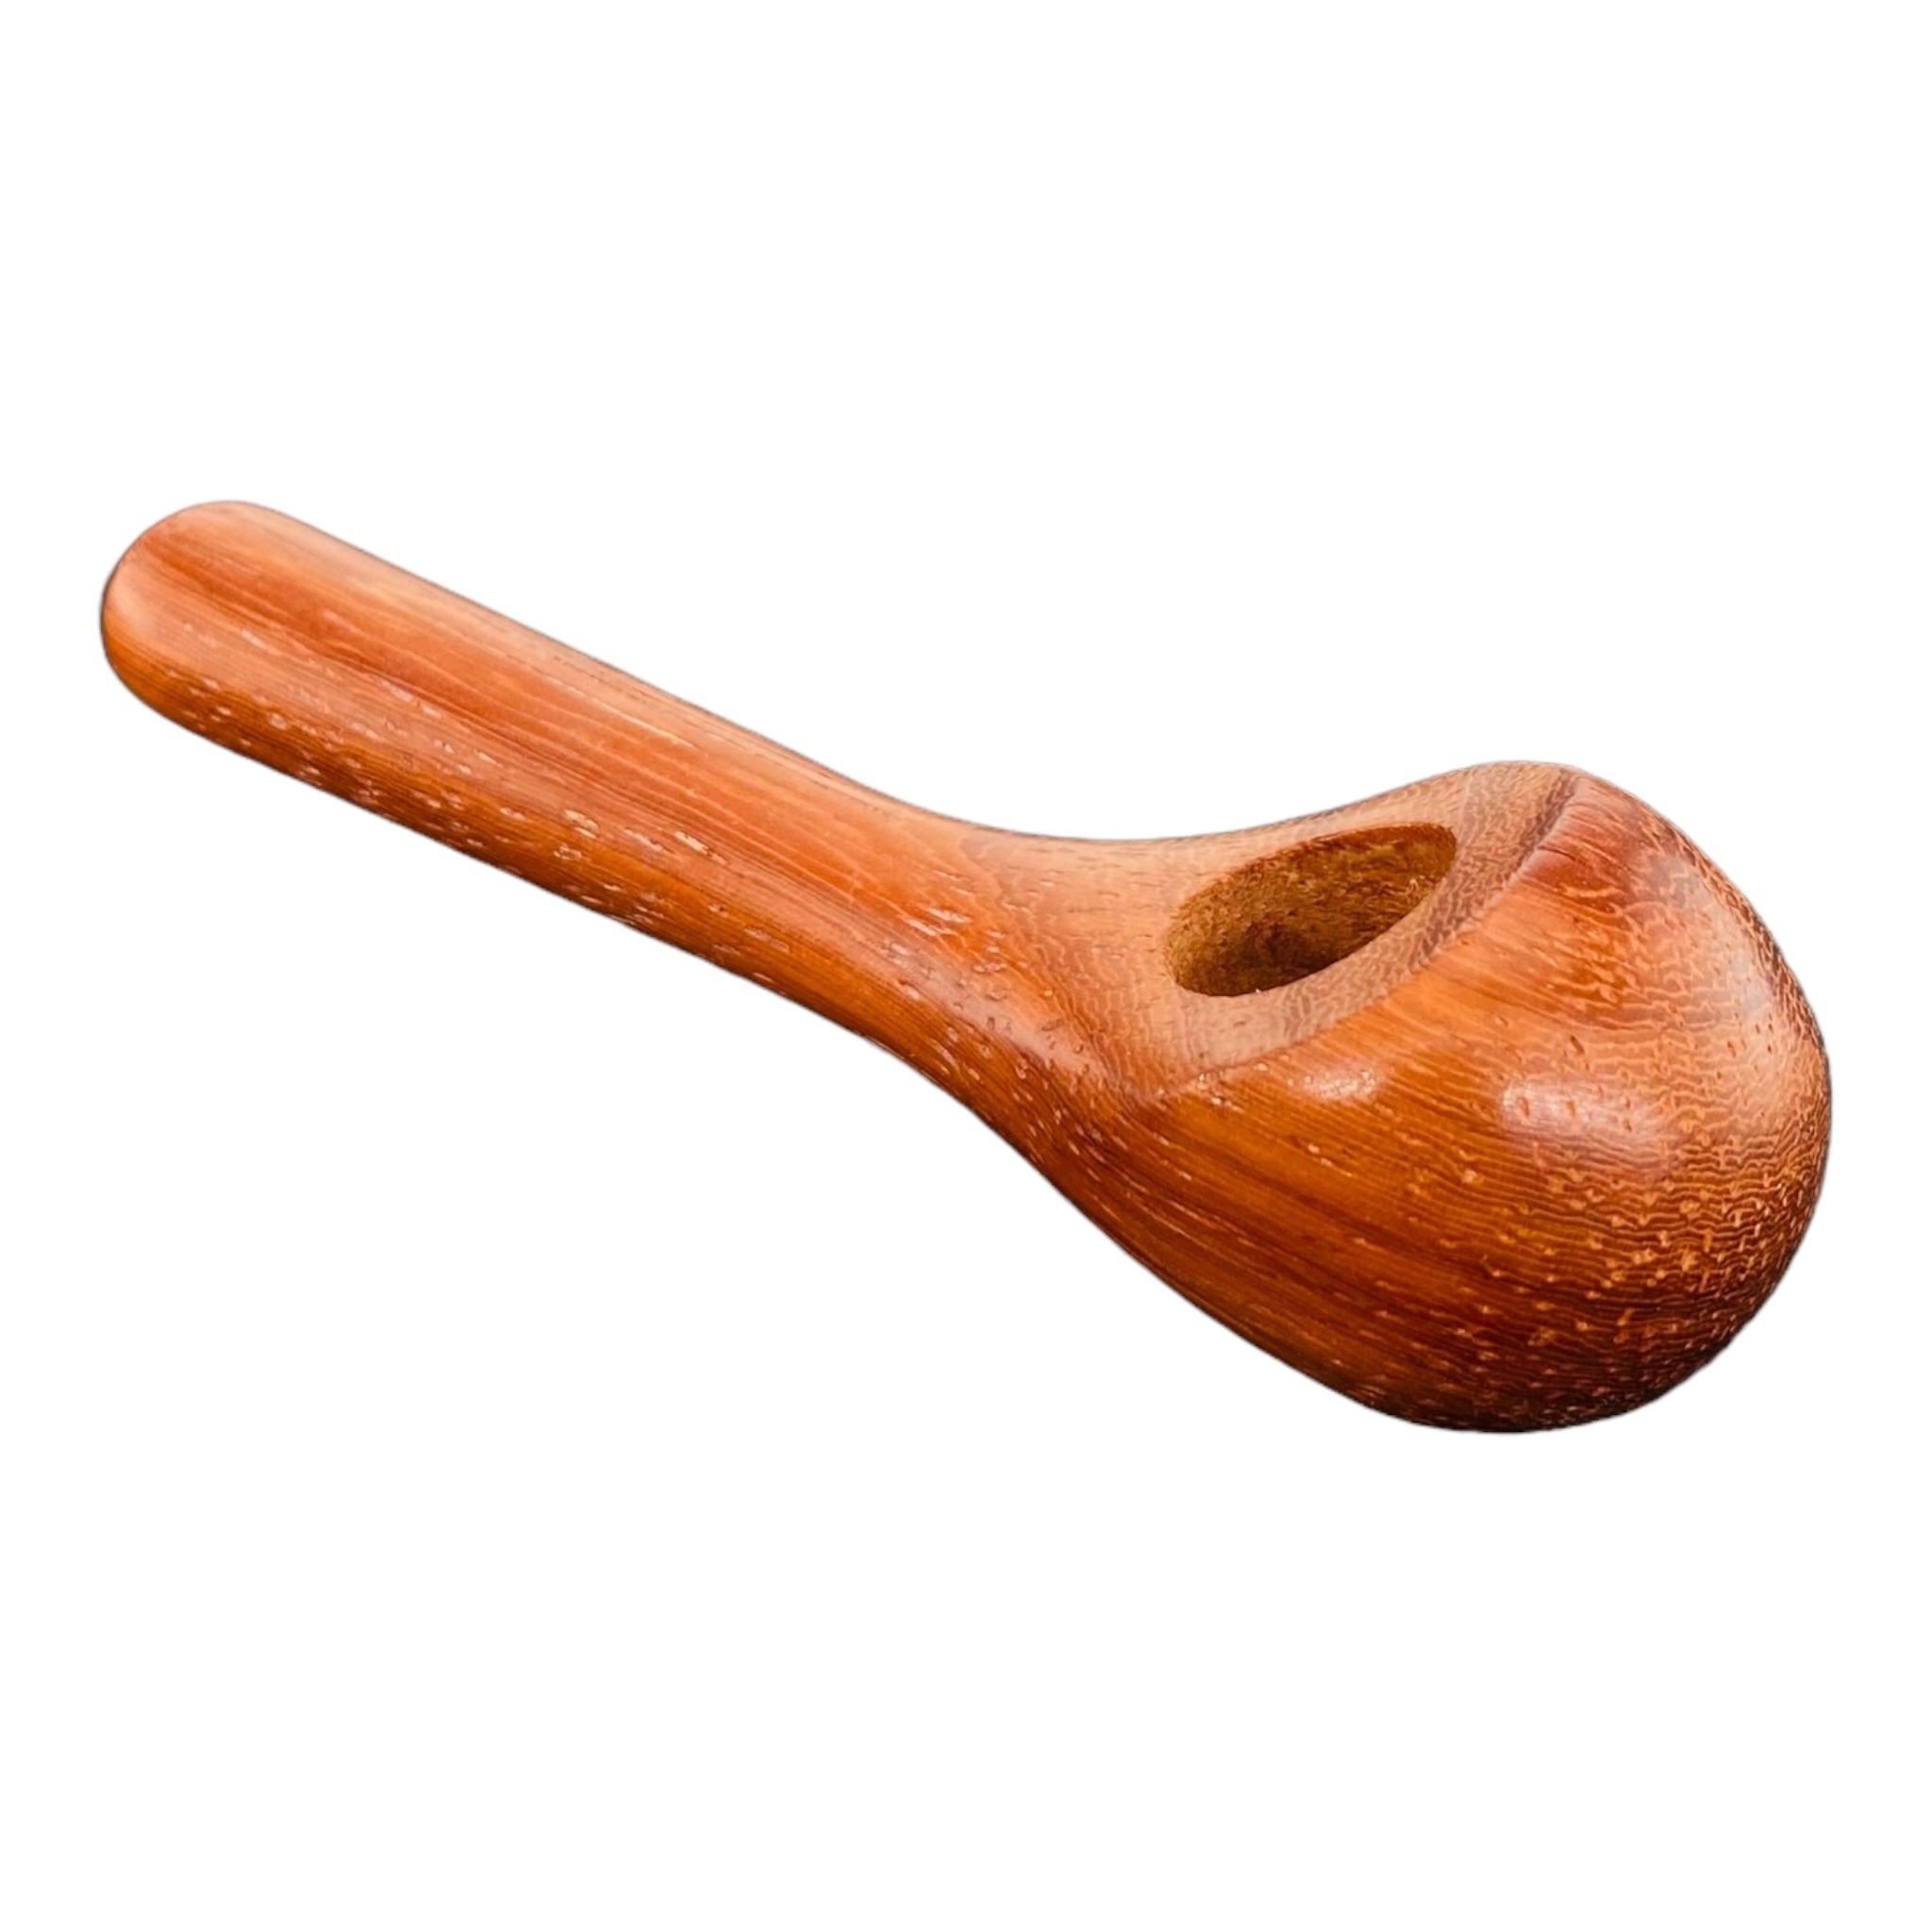 Wood Hand Pipe - Simple Spoon Shape Wood Hand Pipe